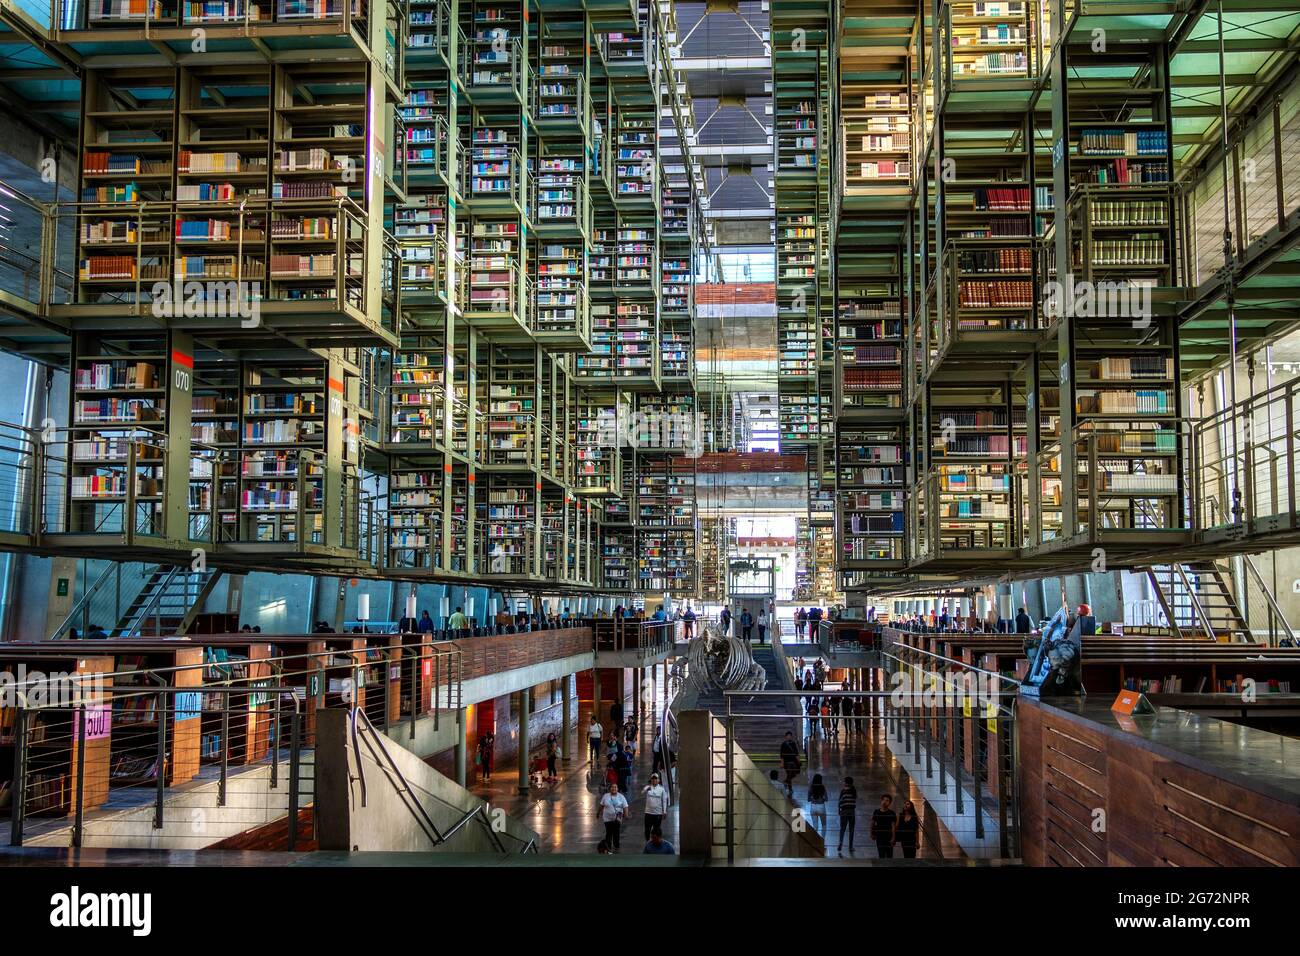 Innenräume der Vasconcelos Bibliothek (spanisch: Biblioteca Vasconcelos) in der Innenstadt von Mexiko-Stadt, Mexiko. Stockfoto